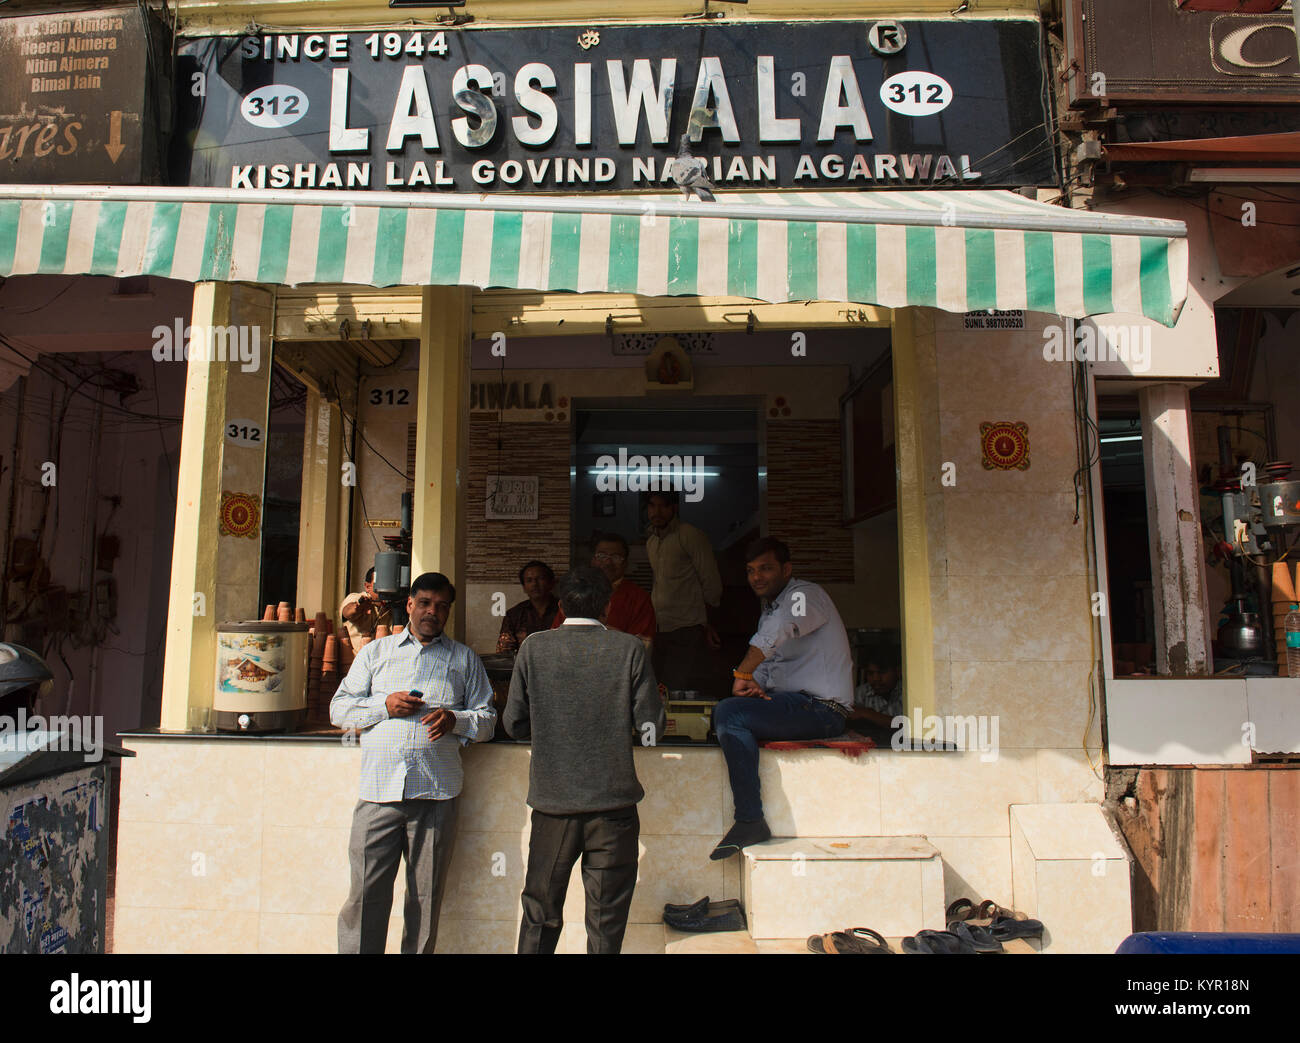 The famous Lassiwala lassi shop, Jaipur, India Stock Photo - Alamy